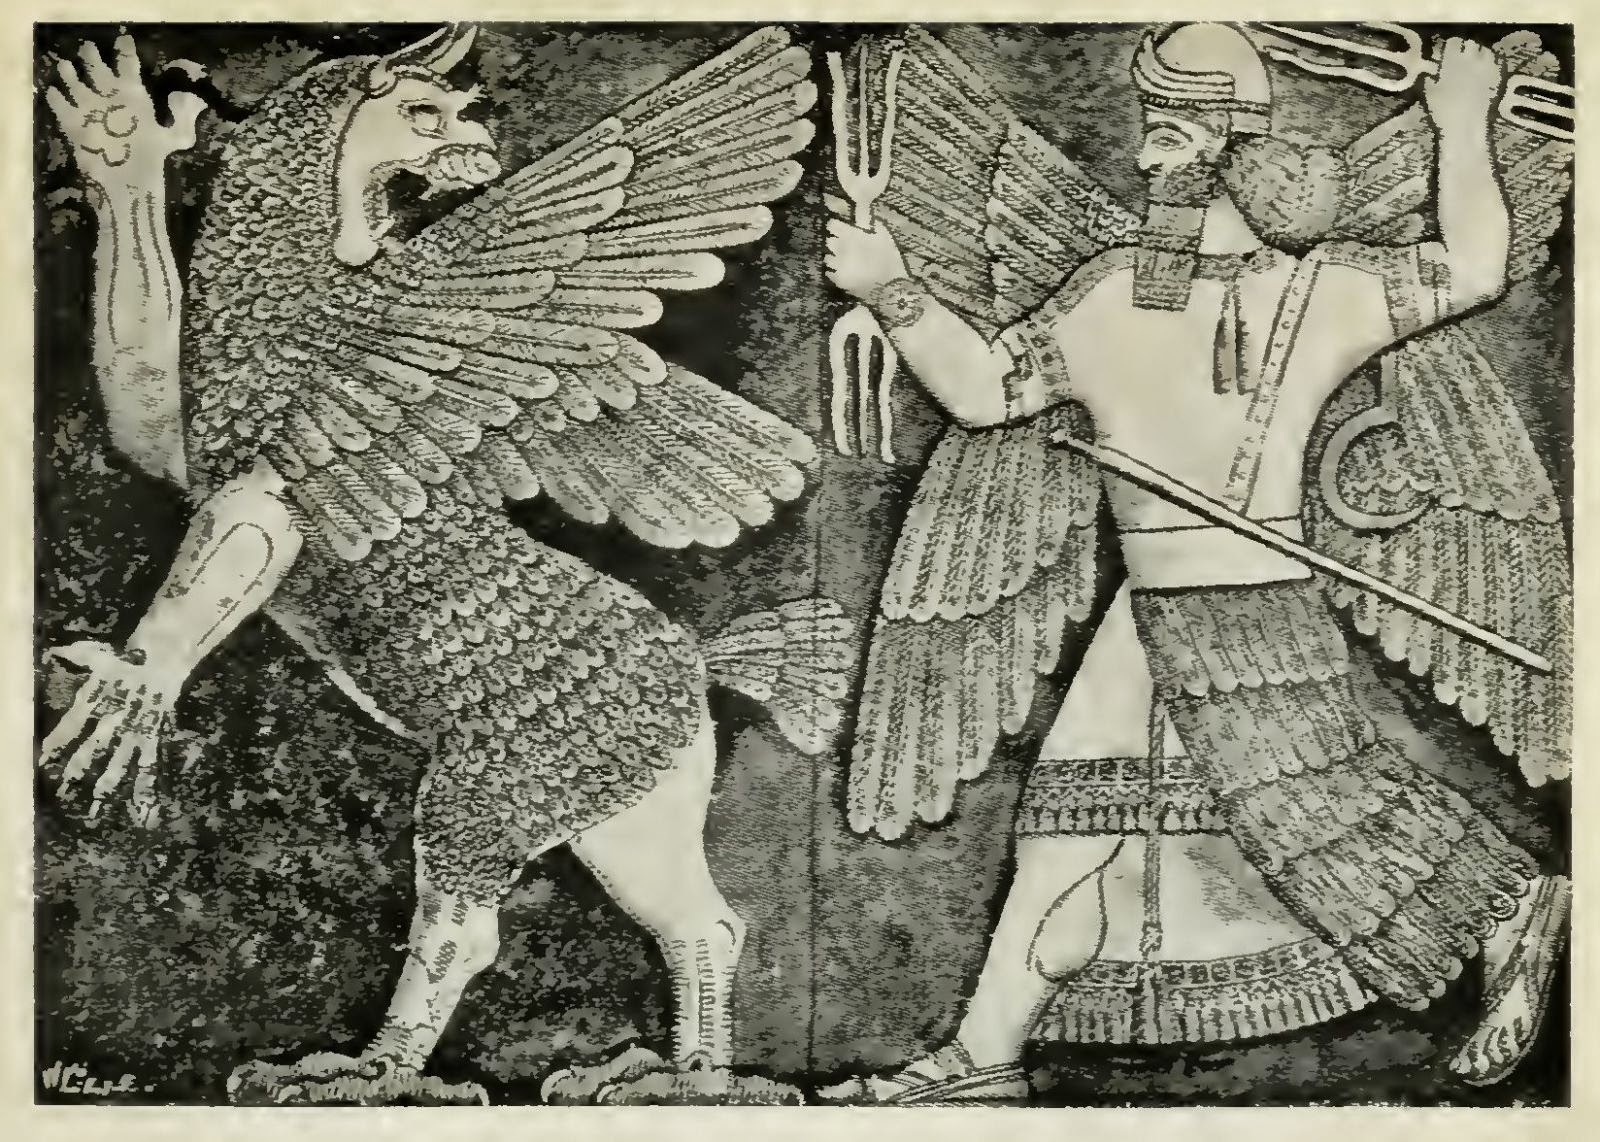 marduk killing tiamat with his arrows 